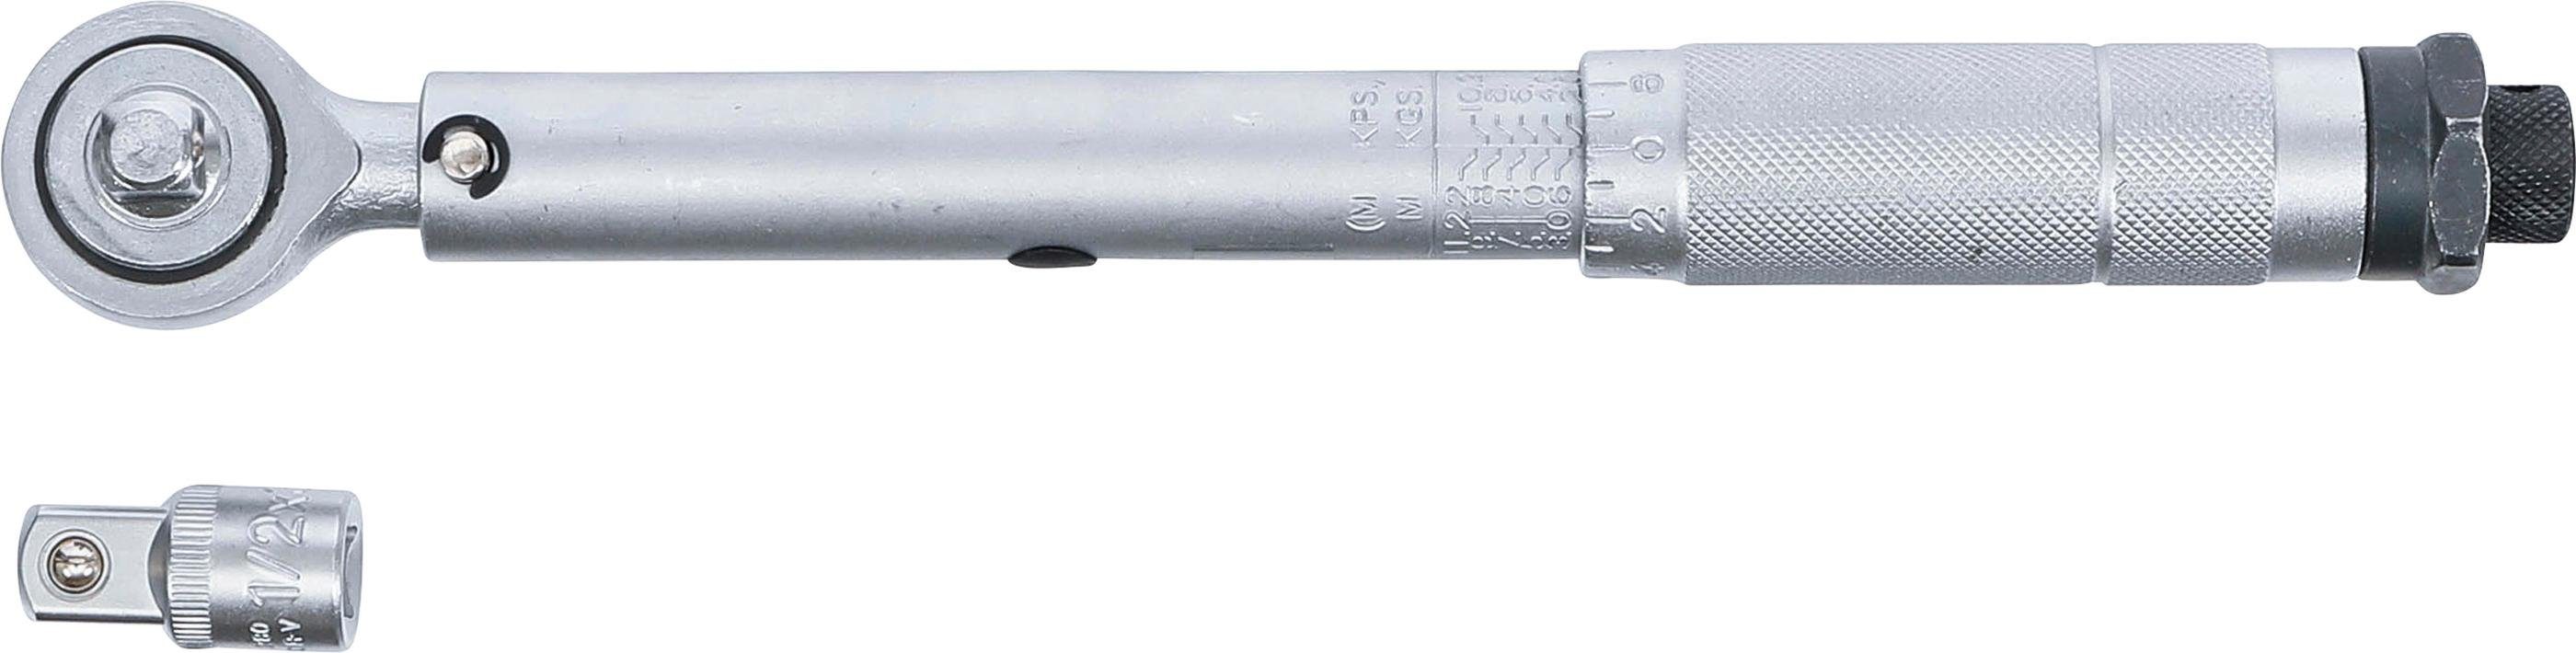 Nm BGS - Abtrieb mm Drehmomentschlüssel 110 20 10 (3/8), technic Drehmomentschlüssel, Außenvierkant